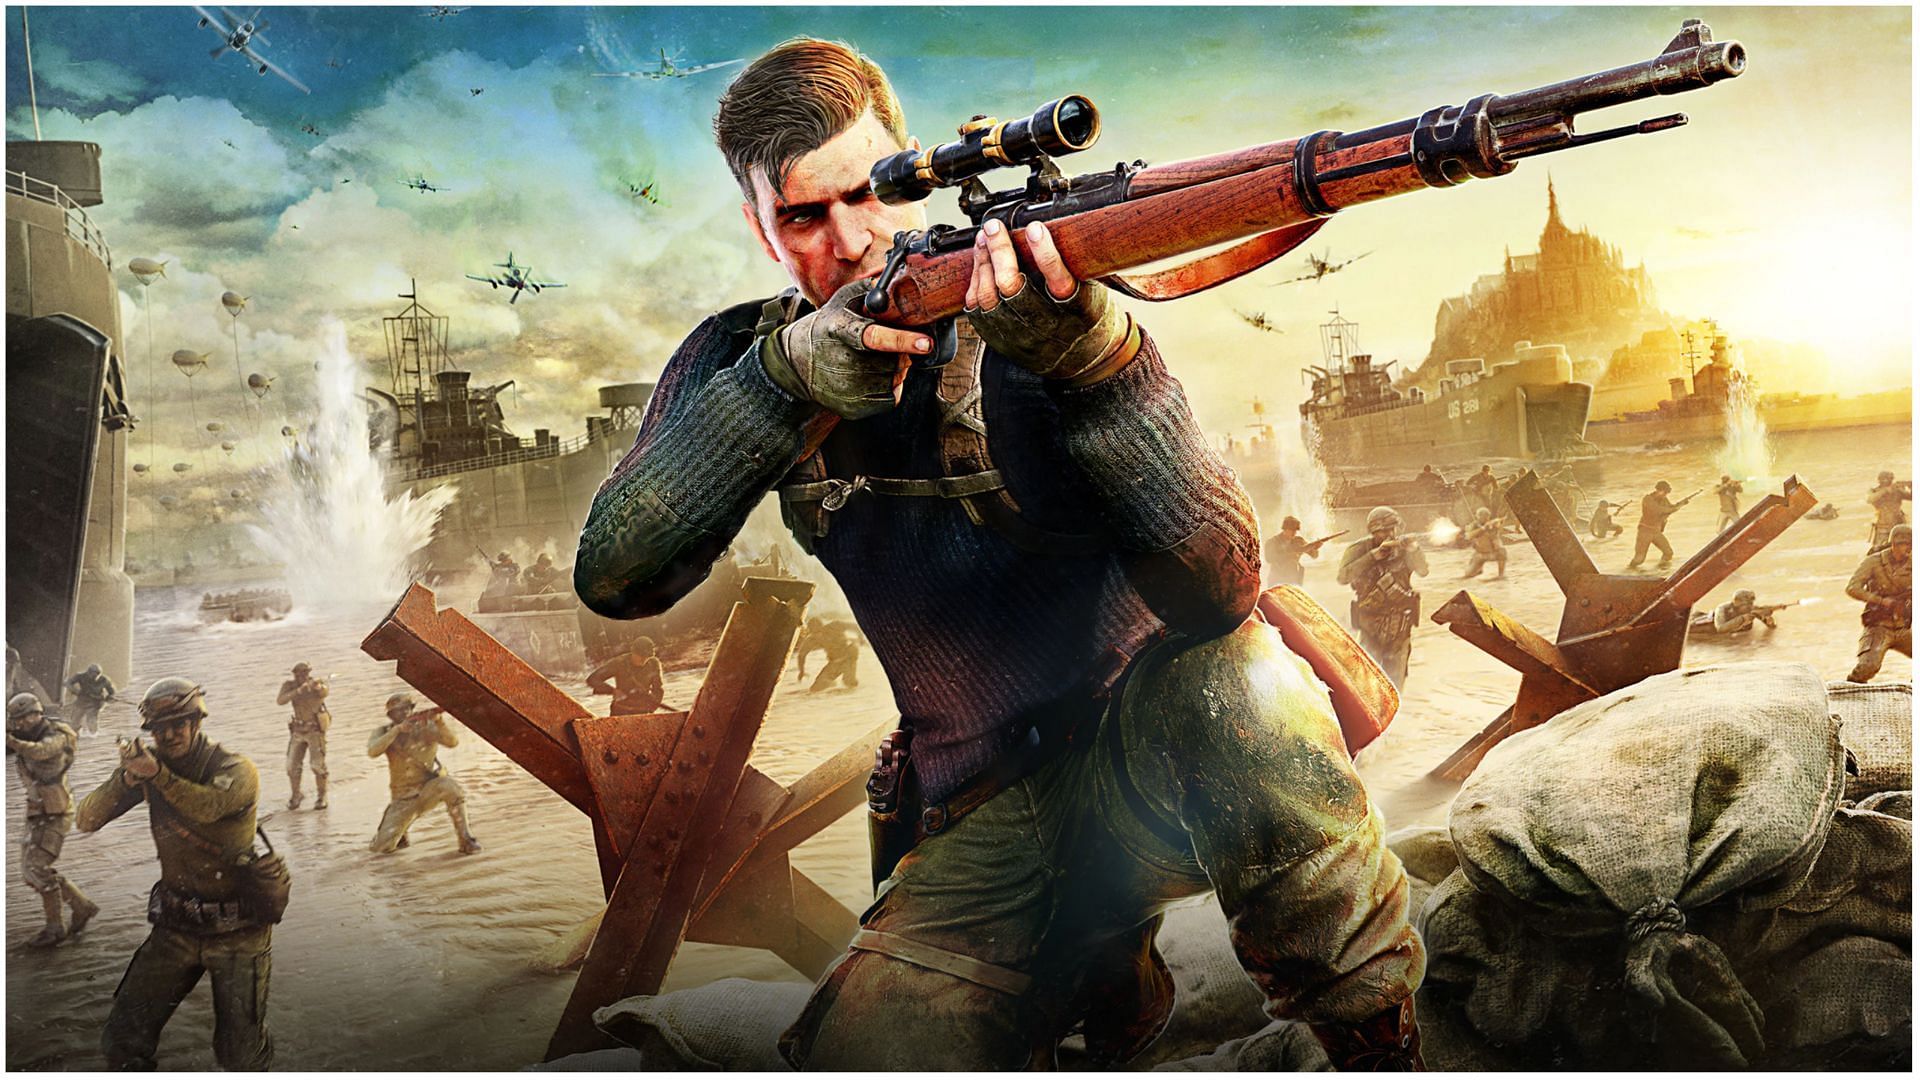 5 best games like Sniper Elite to satisfy your inner marksman